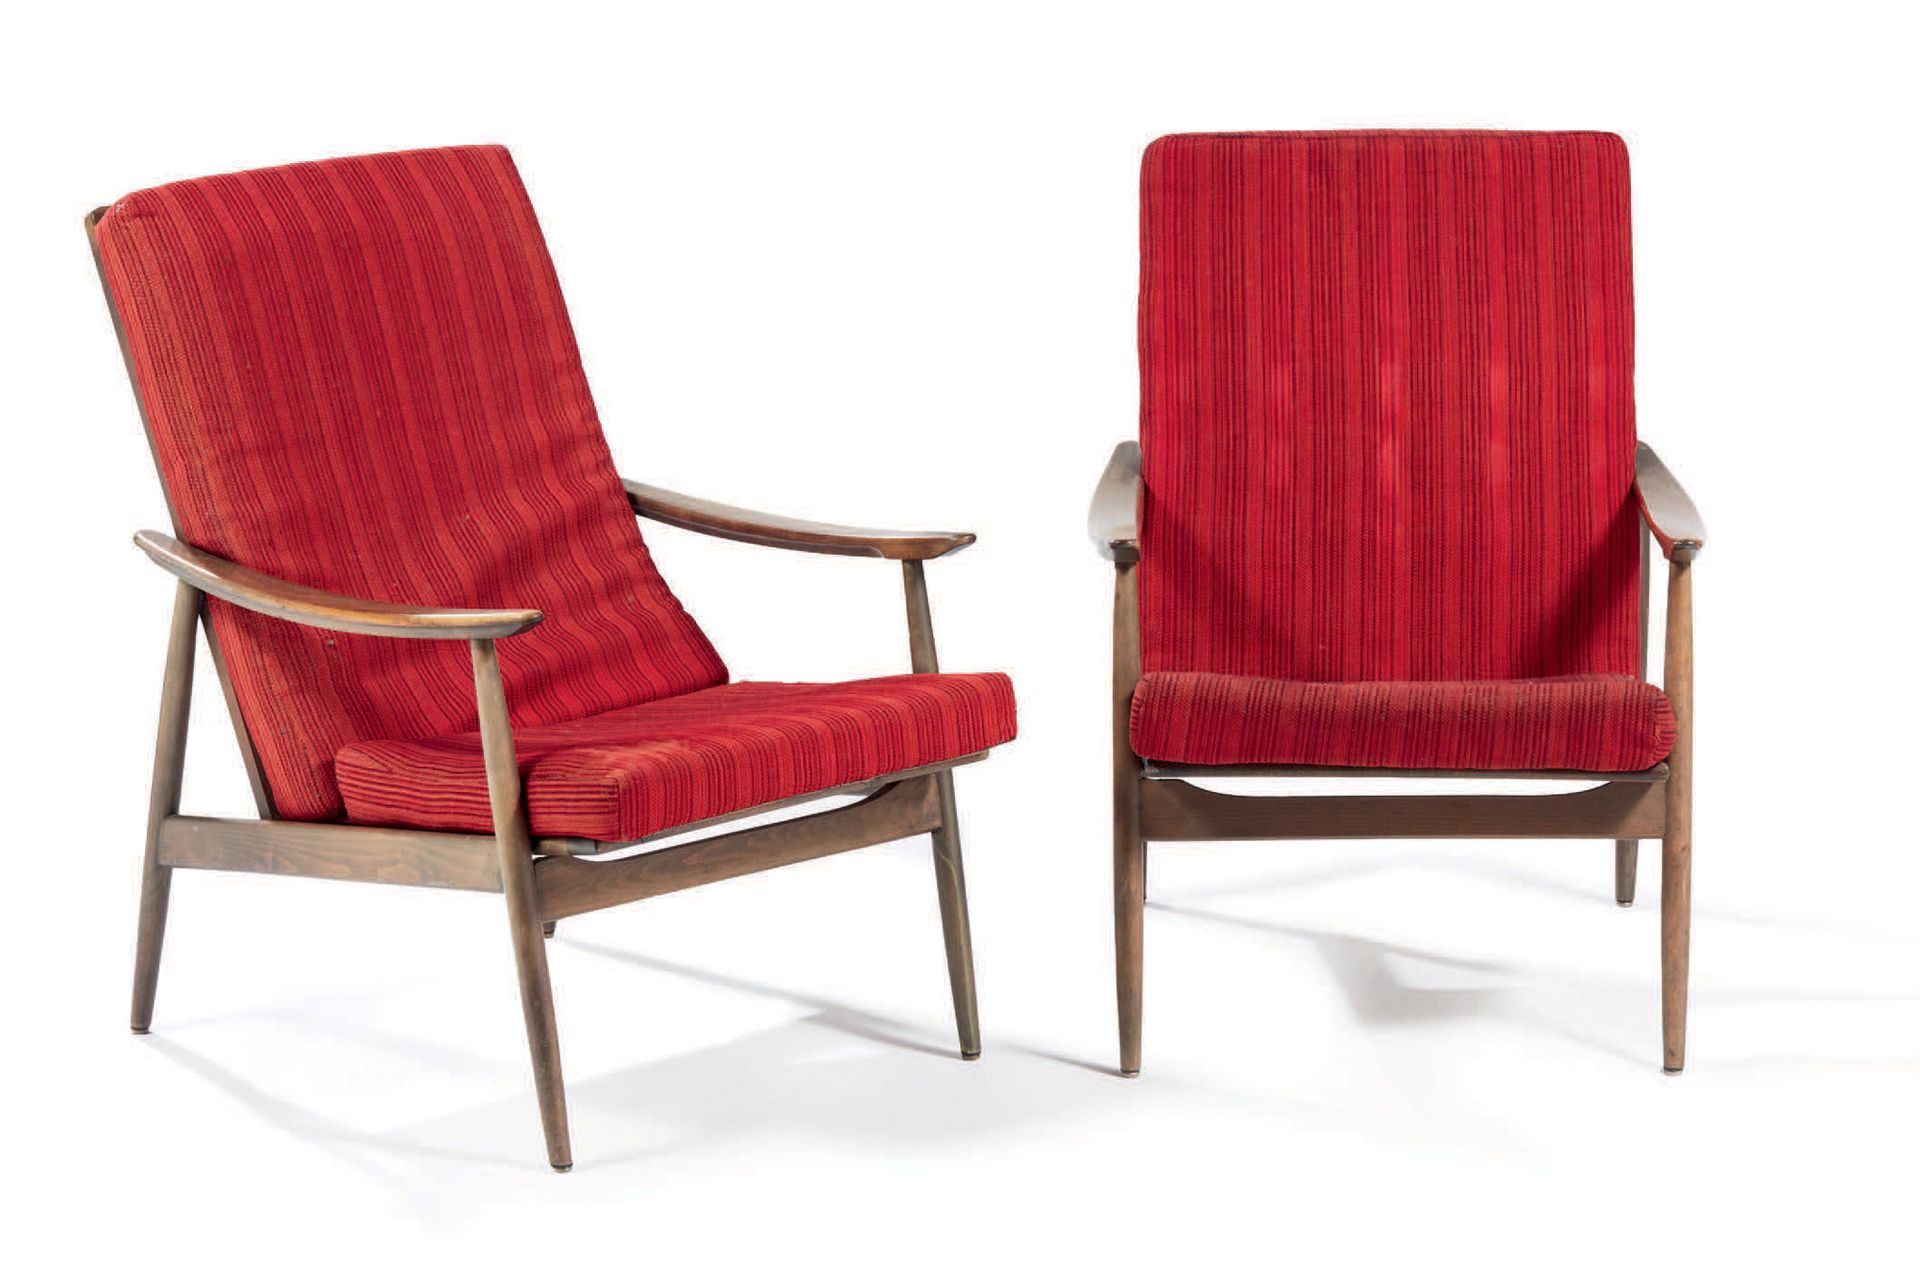 TRAVAIL SCANDINAVE 一对染色木扶手椅，红色织物装饰
H : 98 W : 67 D : 78 cm